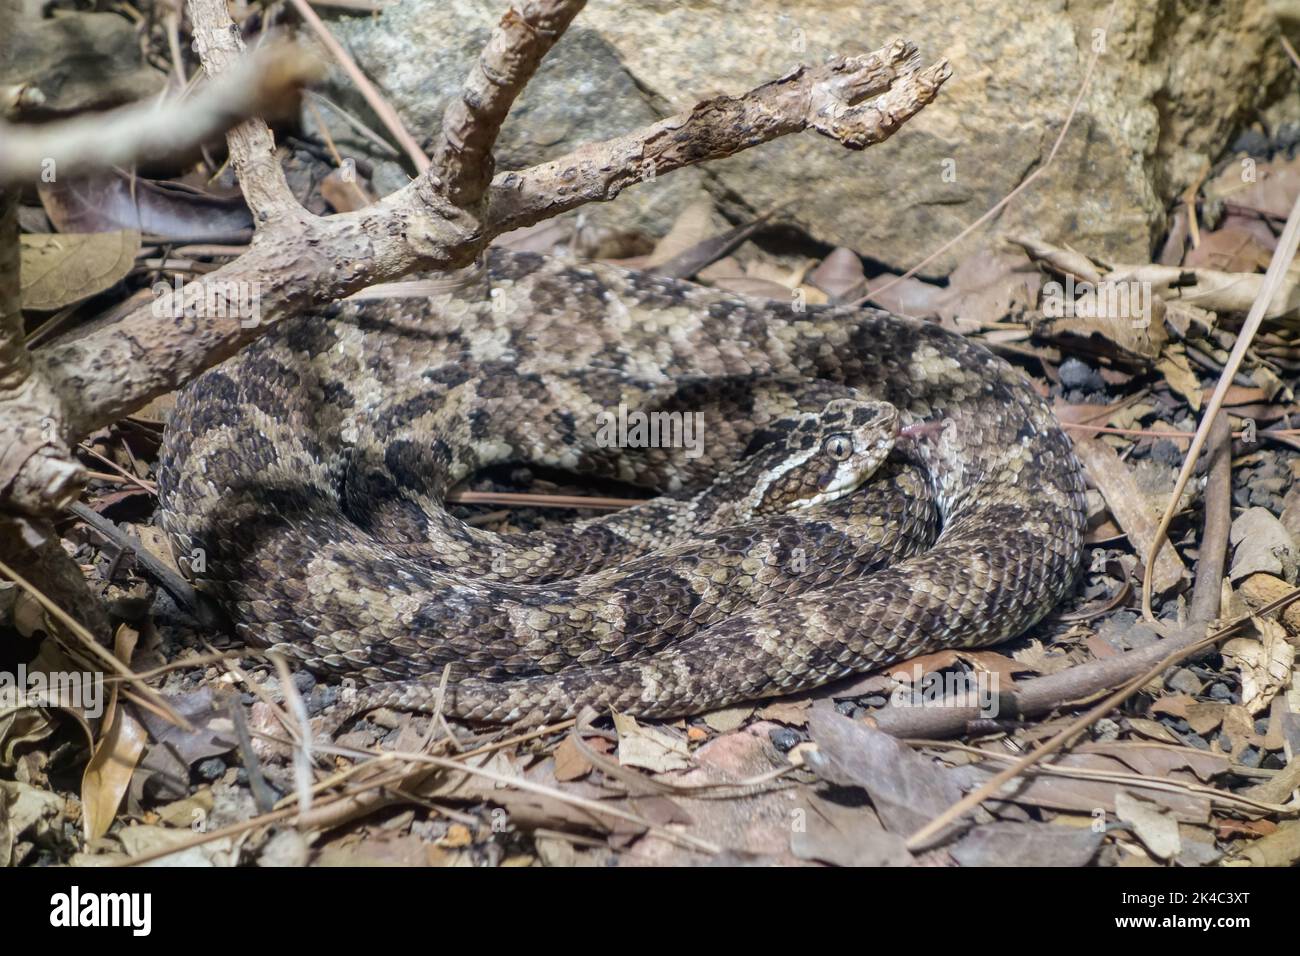 Caatinga Lancehead snake, or Bothrops erythromelas. Jararaca da seca brazilian. Stock Photo